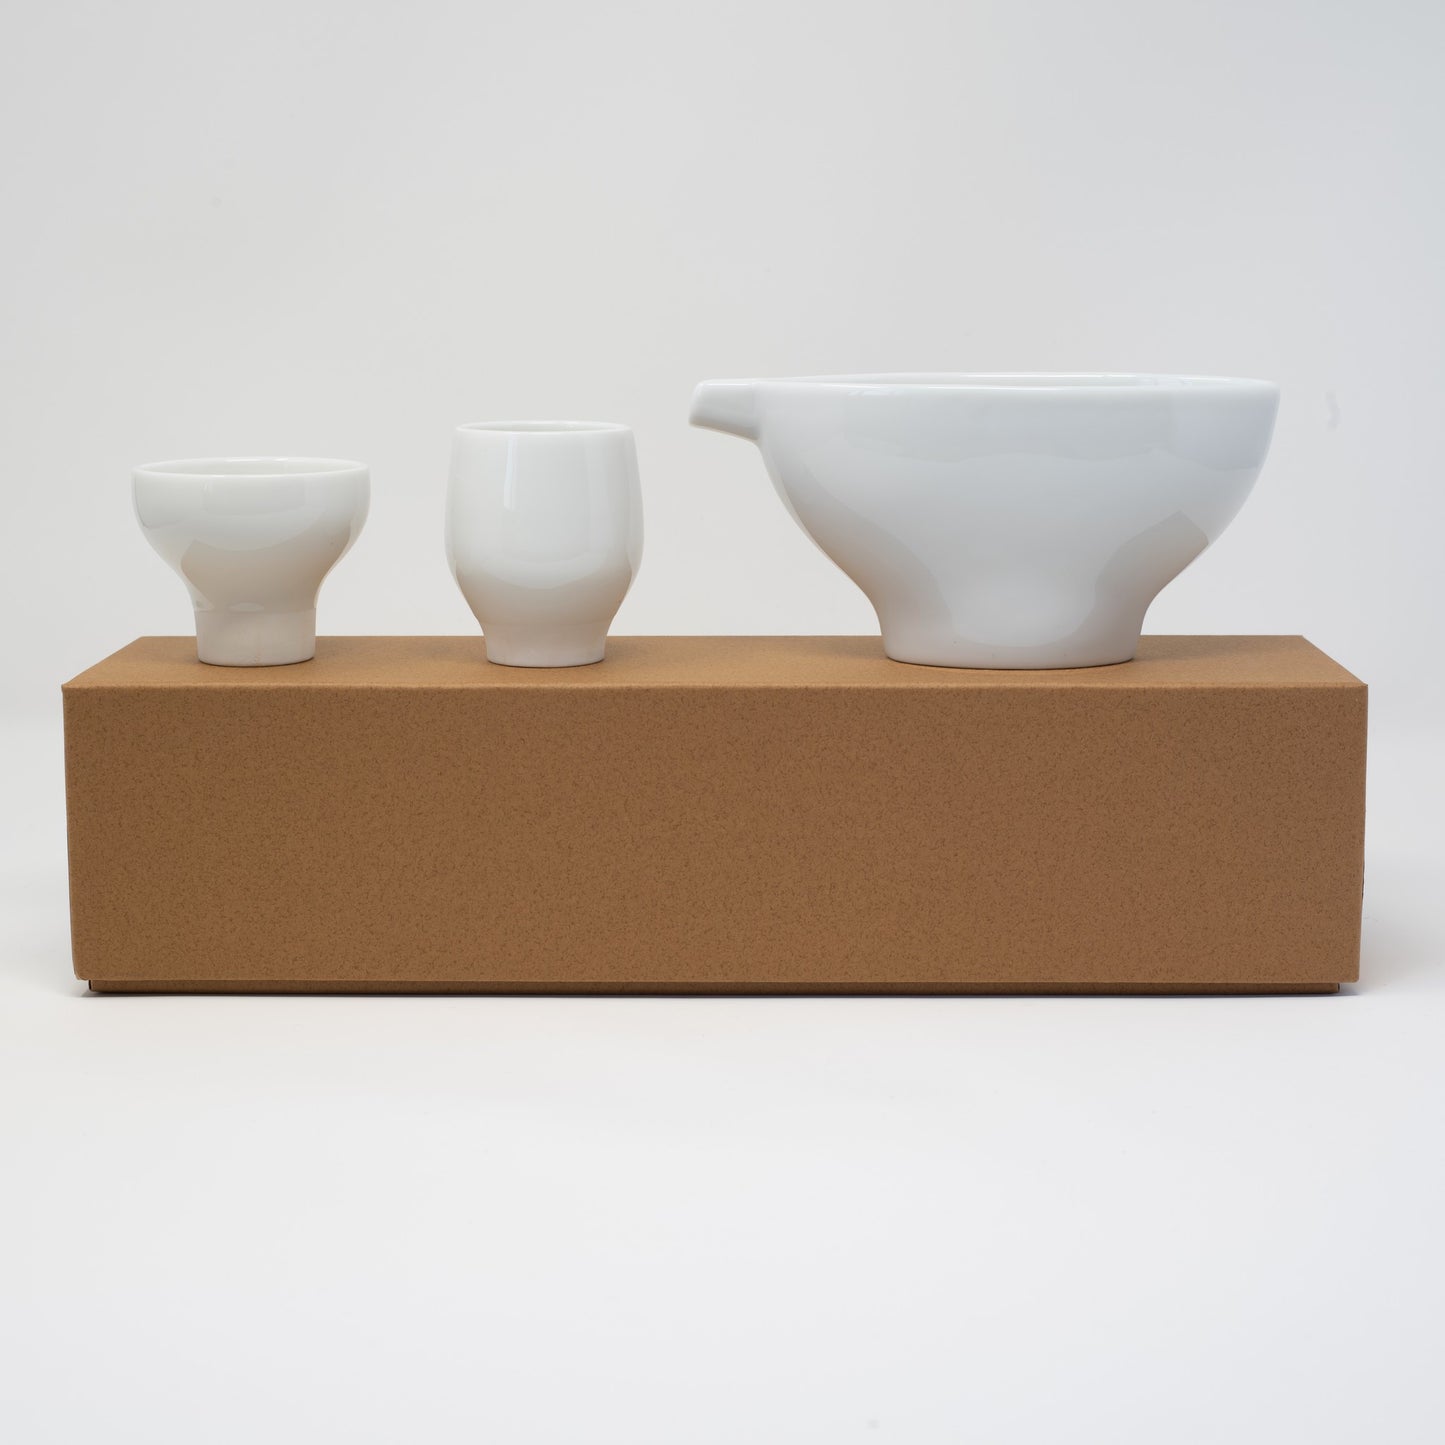 Sake pourer with 2 cups boat shape boxed set